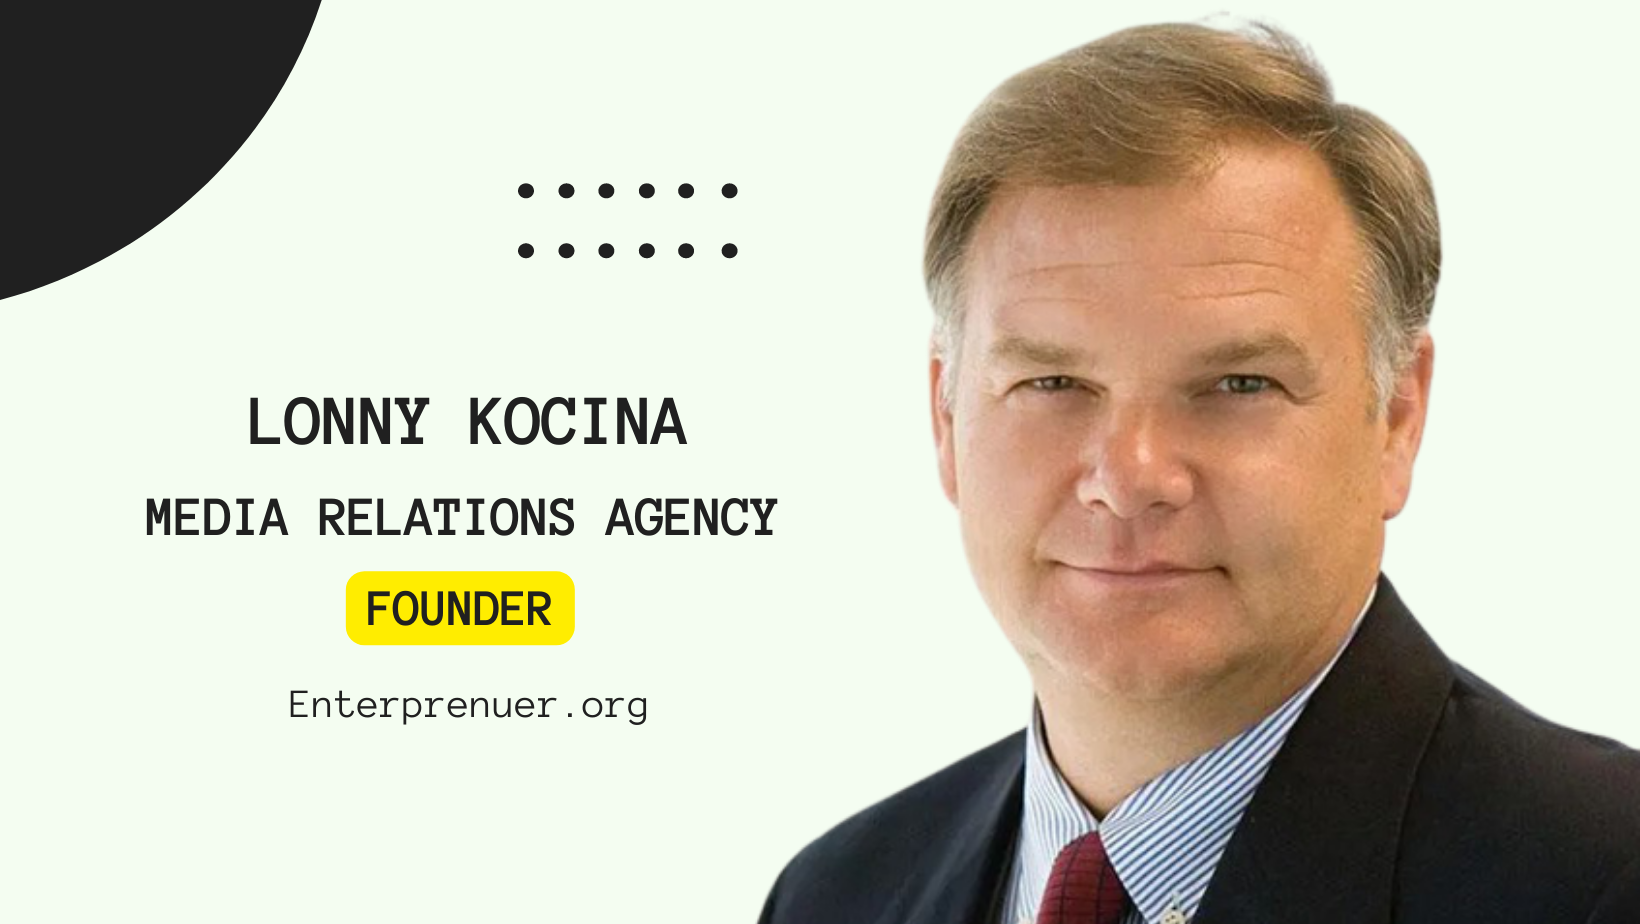 Lonny Kocina Founder of Media Relations Agency